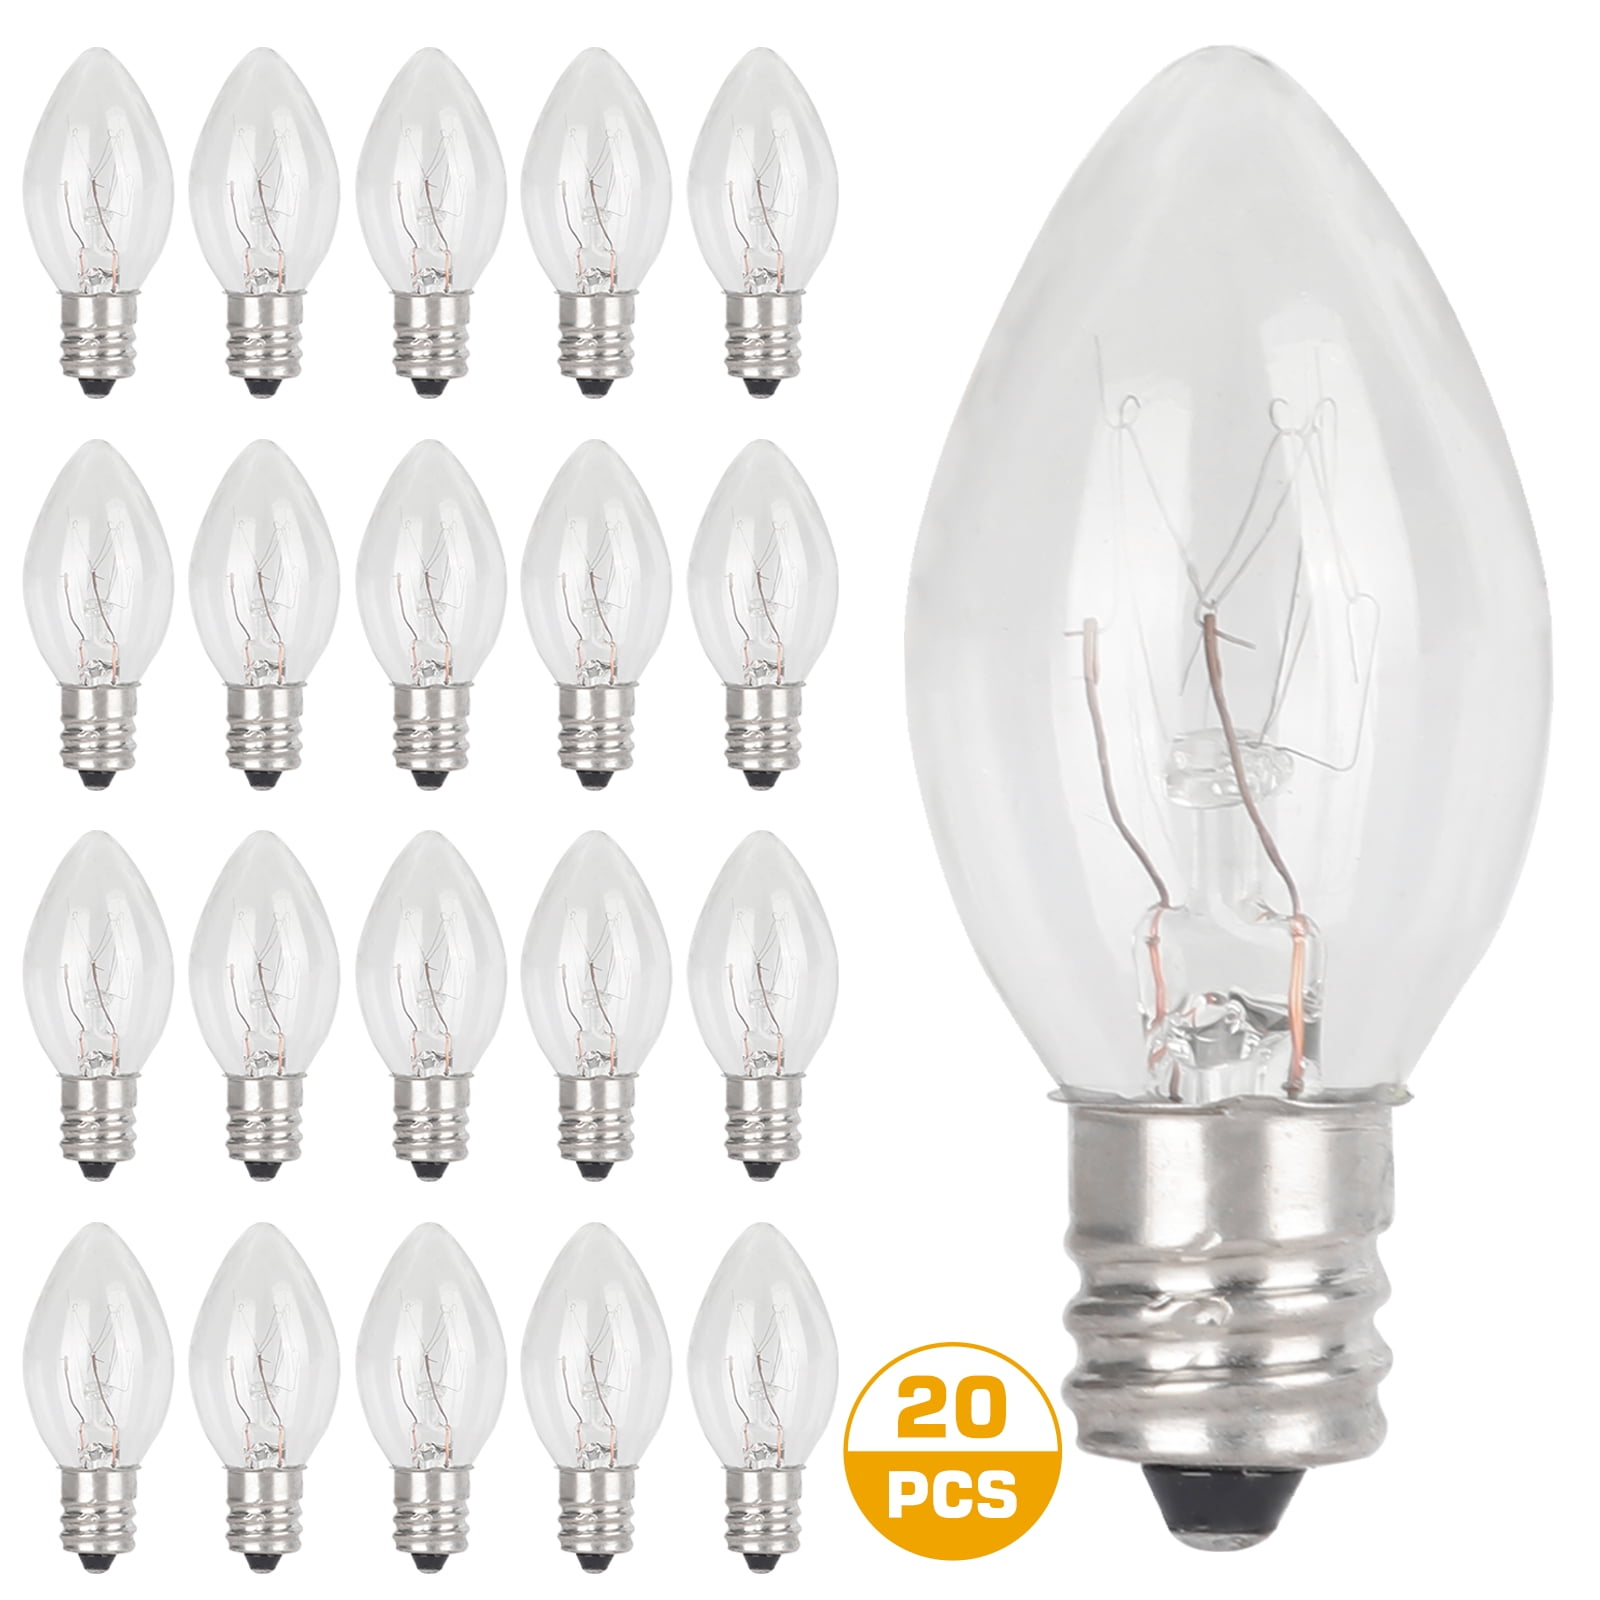 20pcs E12 LED Bulb, EEEkit LED Chandelier Light Bulbs, Transparent Candle Light Bulbs with E12 Base, 15W Replacement Bulbs, 2500K Warm Light Salt Lamp for Oven Fixtures - Walmart.com